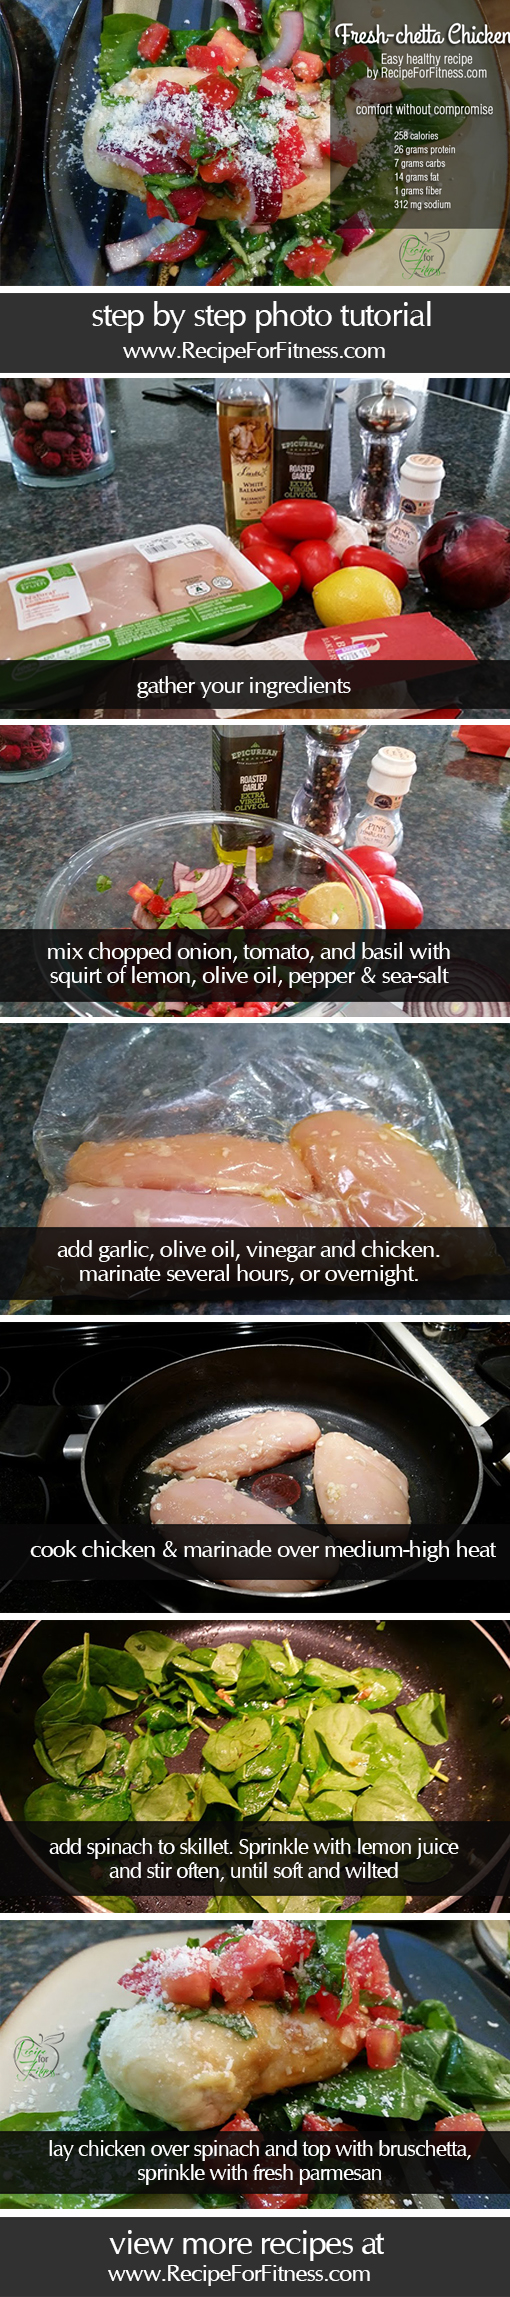 step by step instructions for Freshetta Chicken!